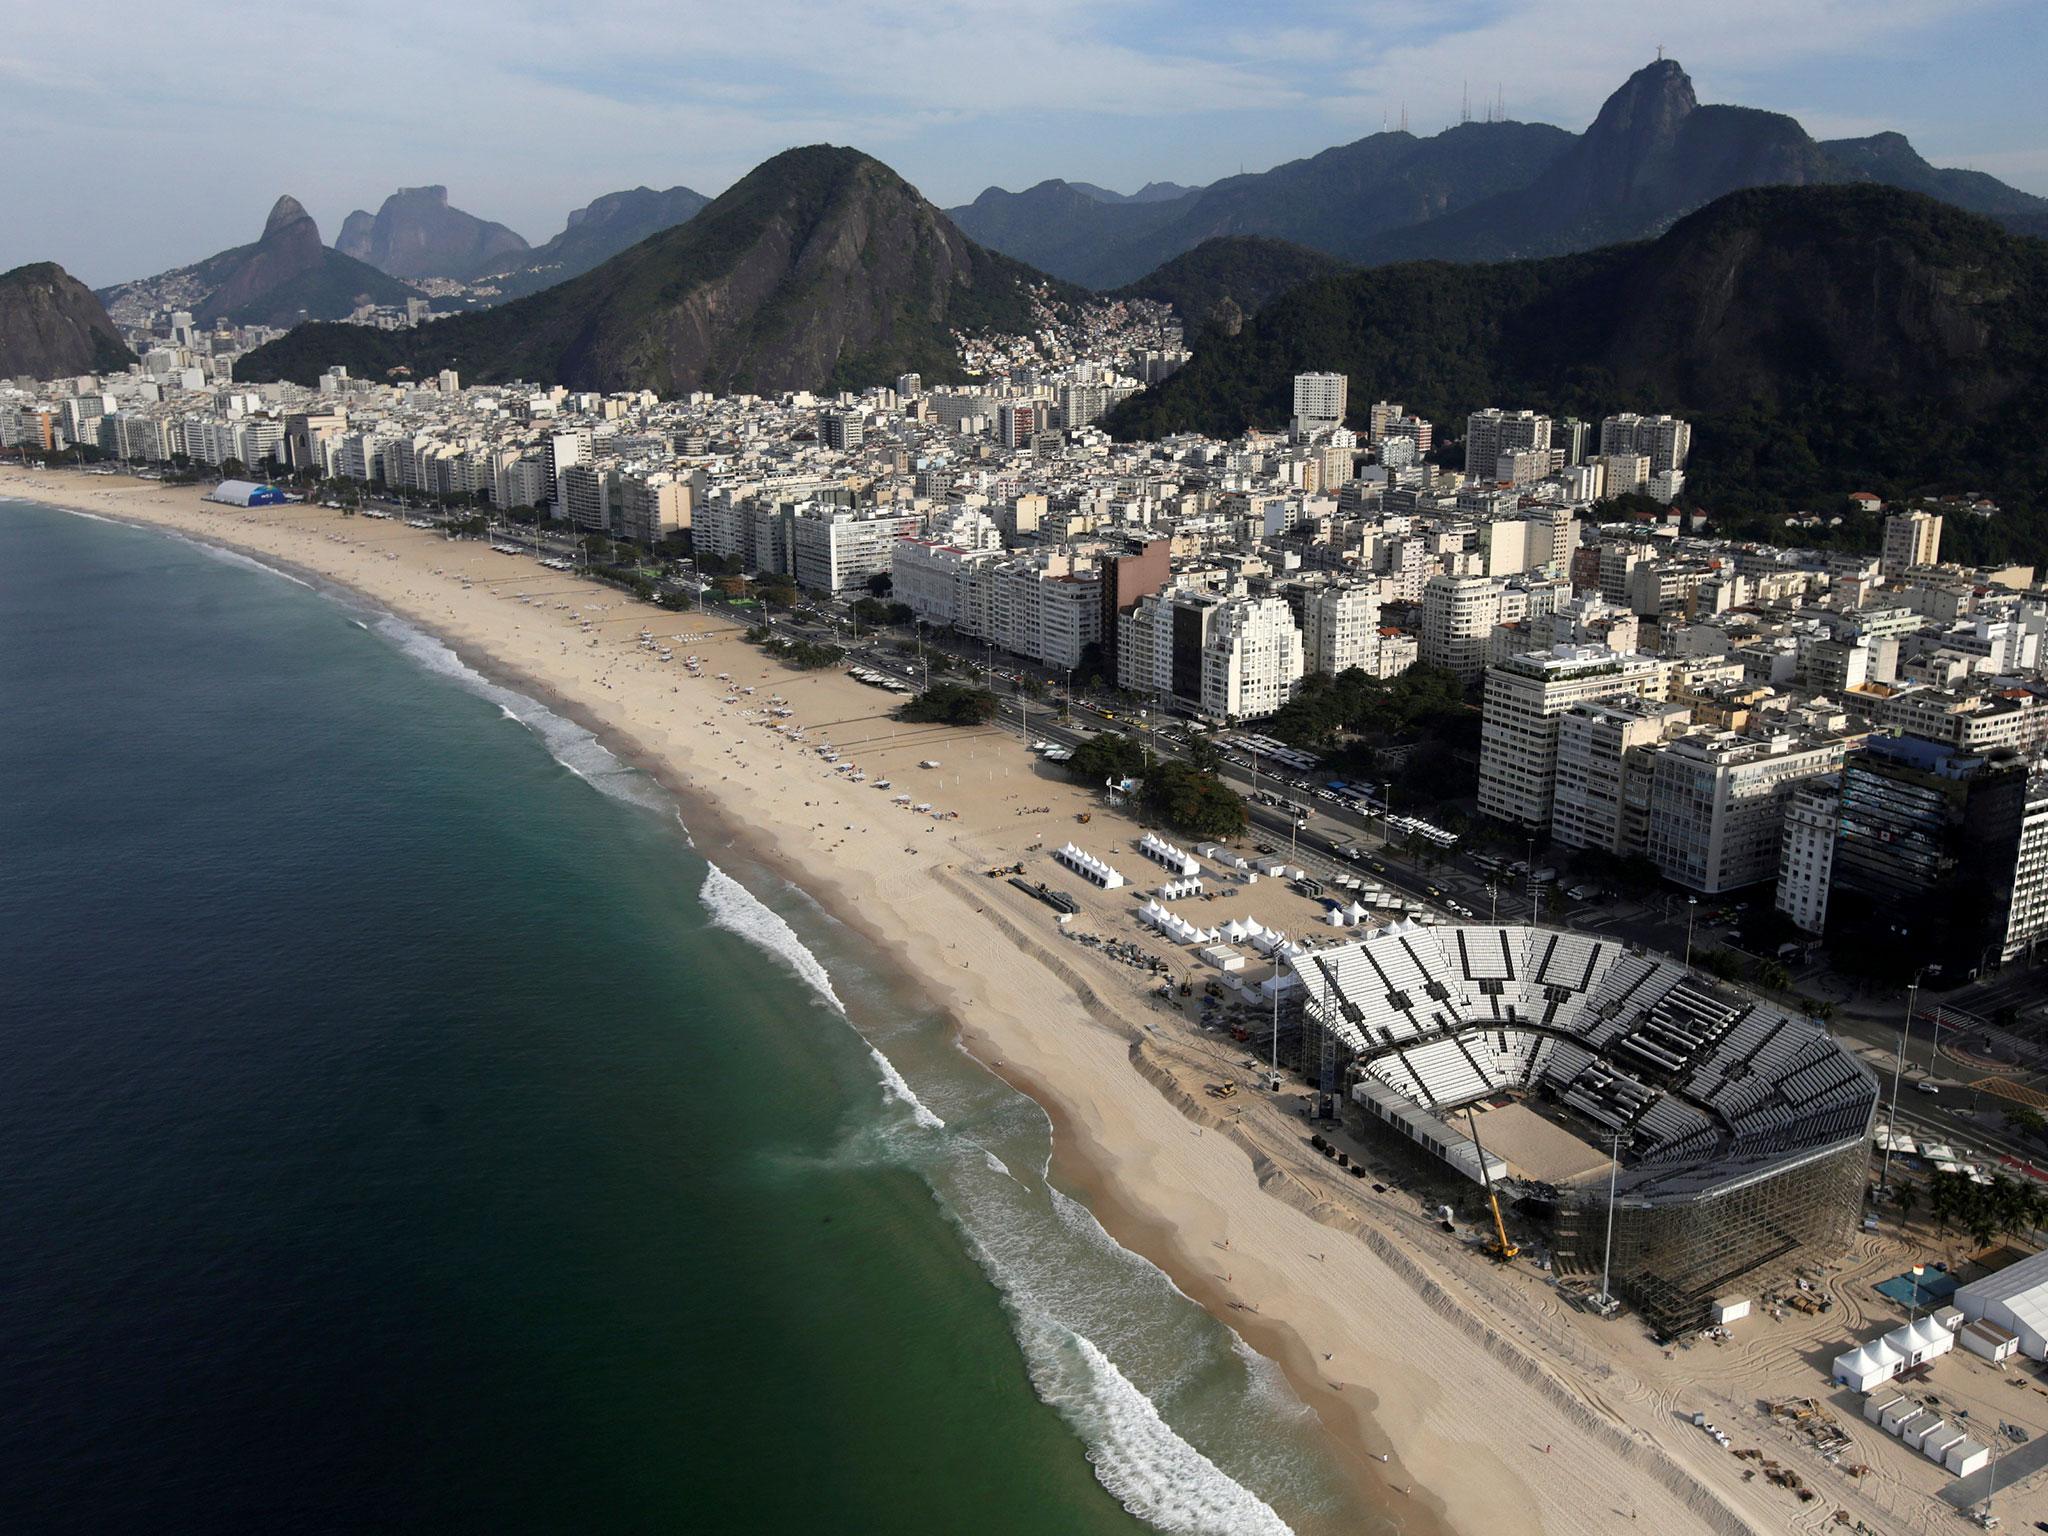 The 2016 Rio Olympics beach volleyball venue on Copacabana beach